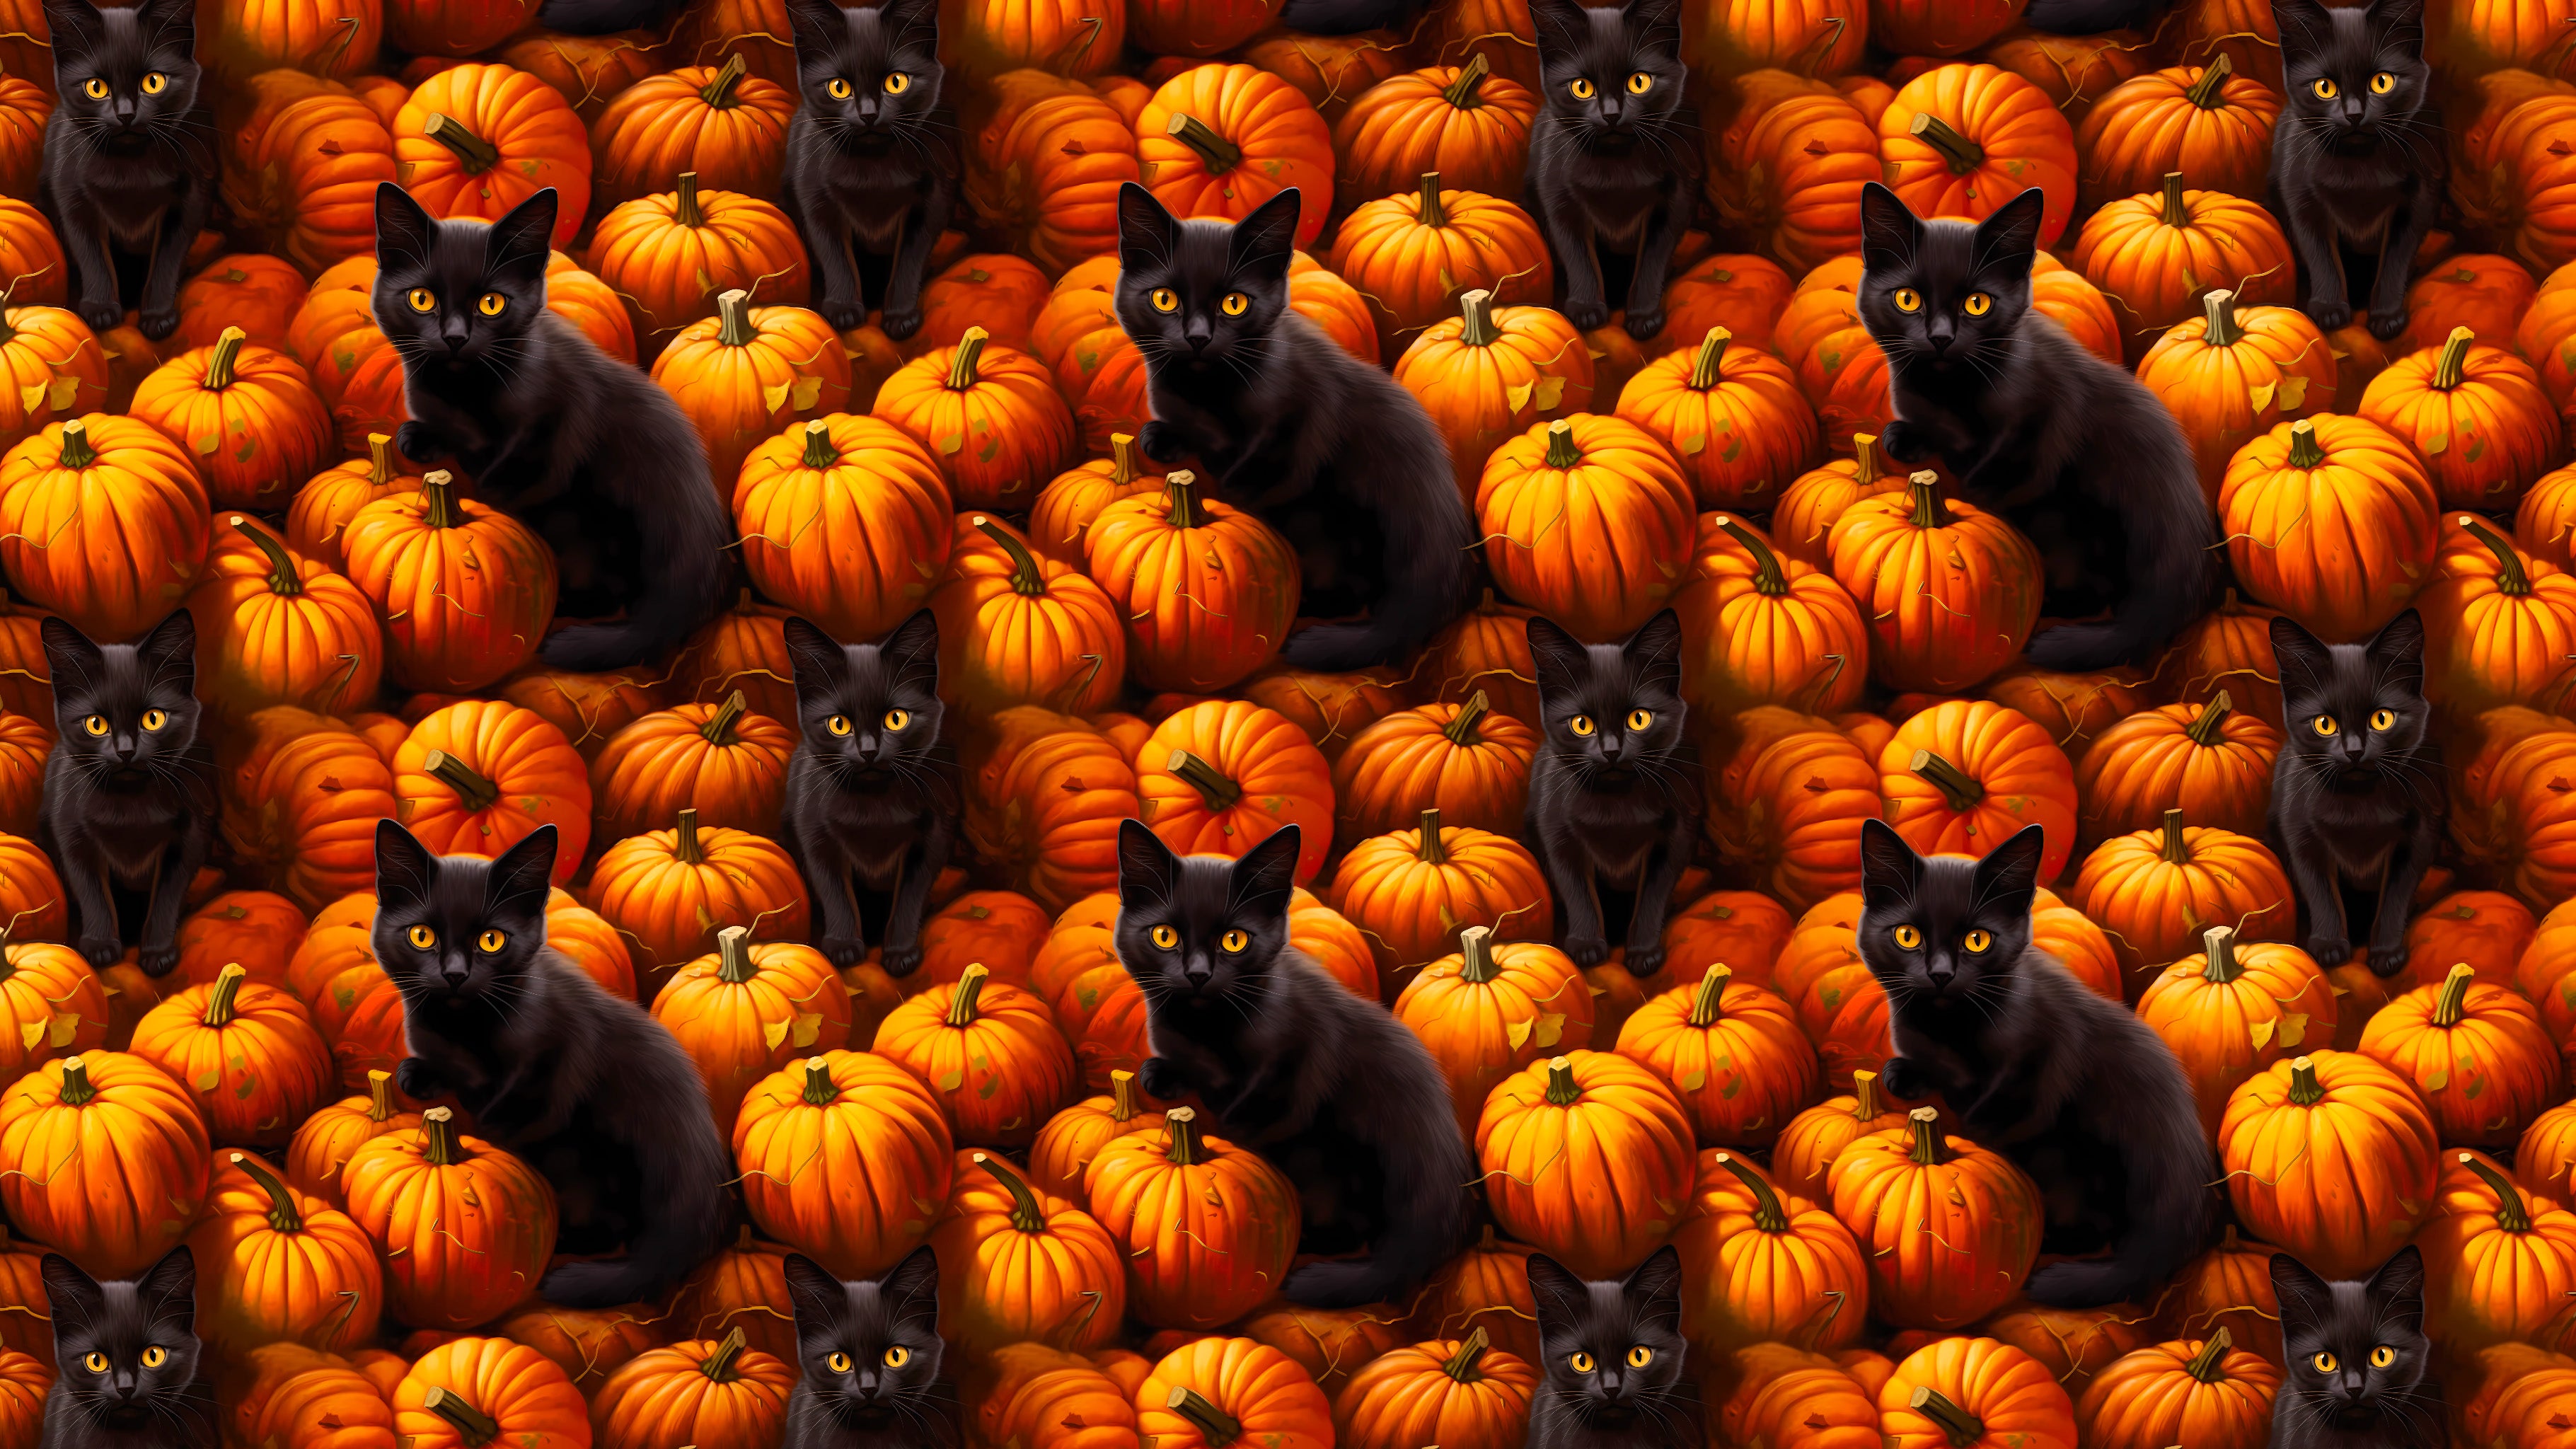 Black Kittens in the Pumpkin Patch